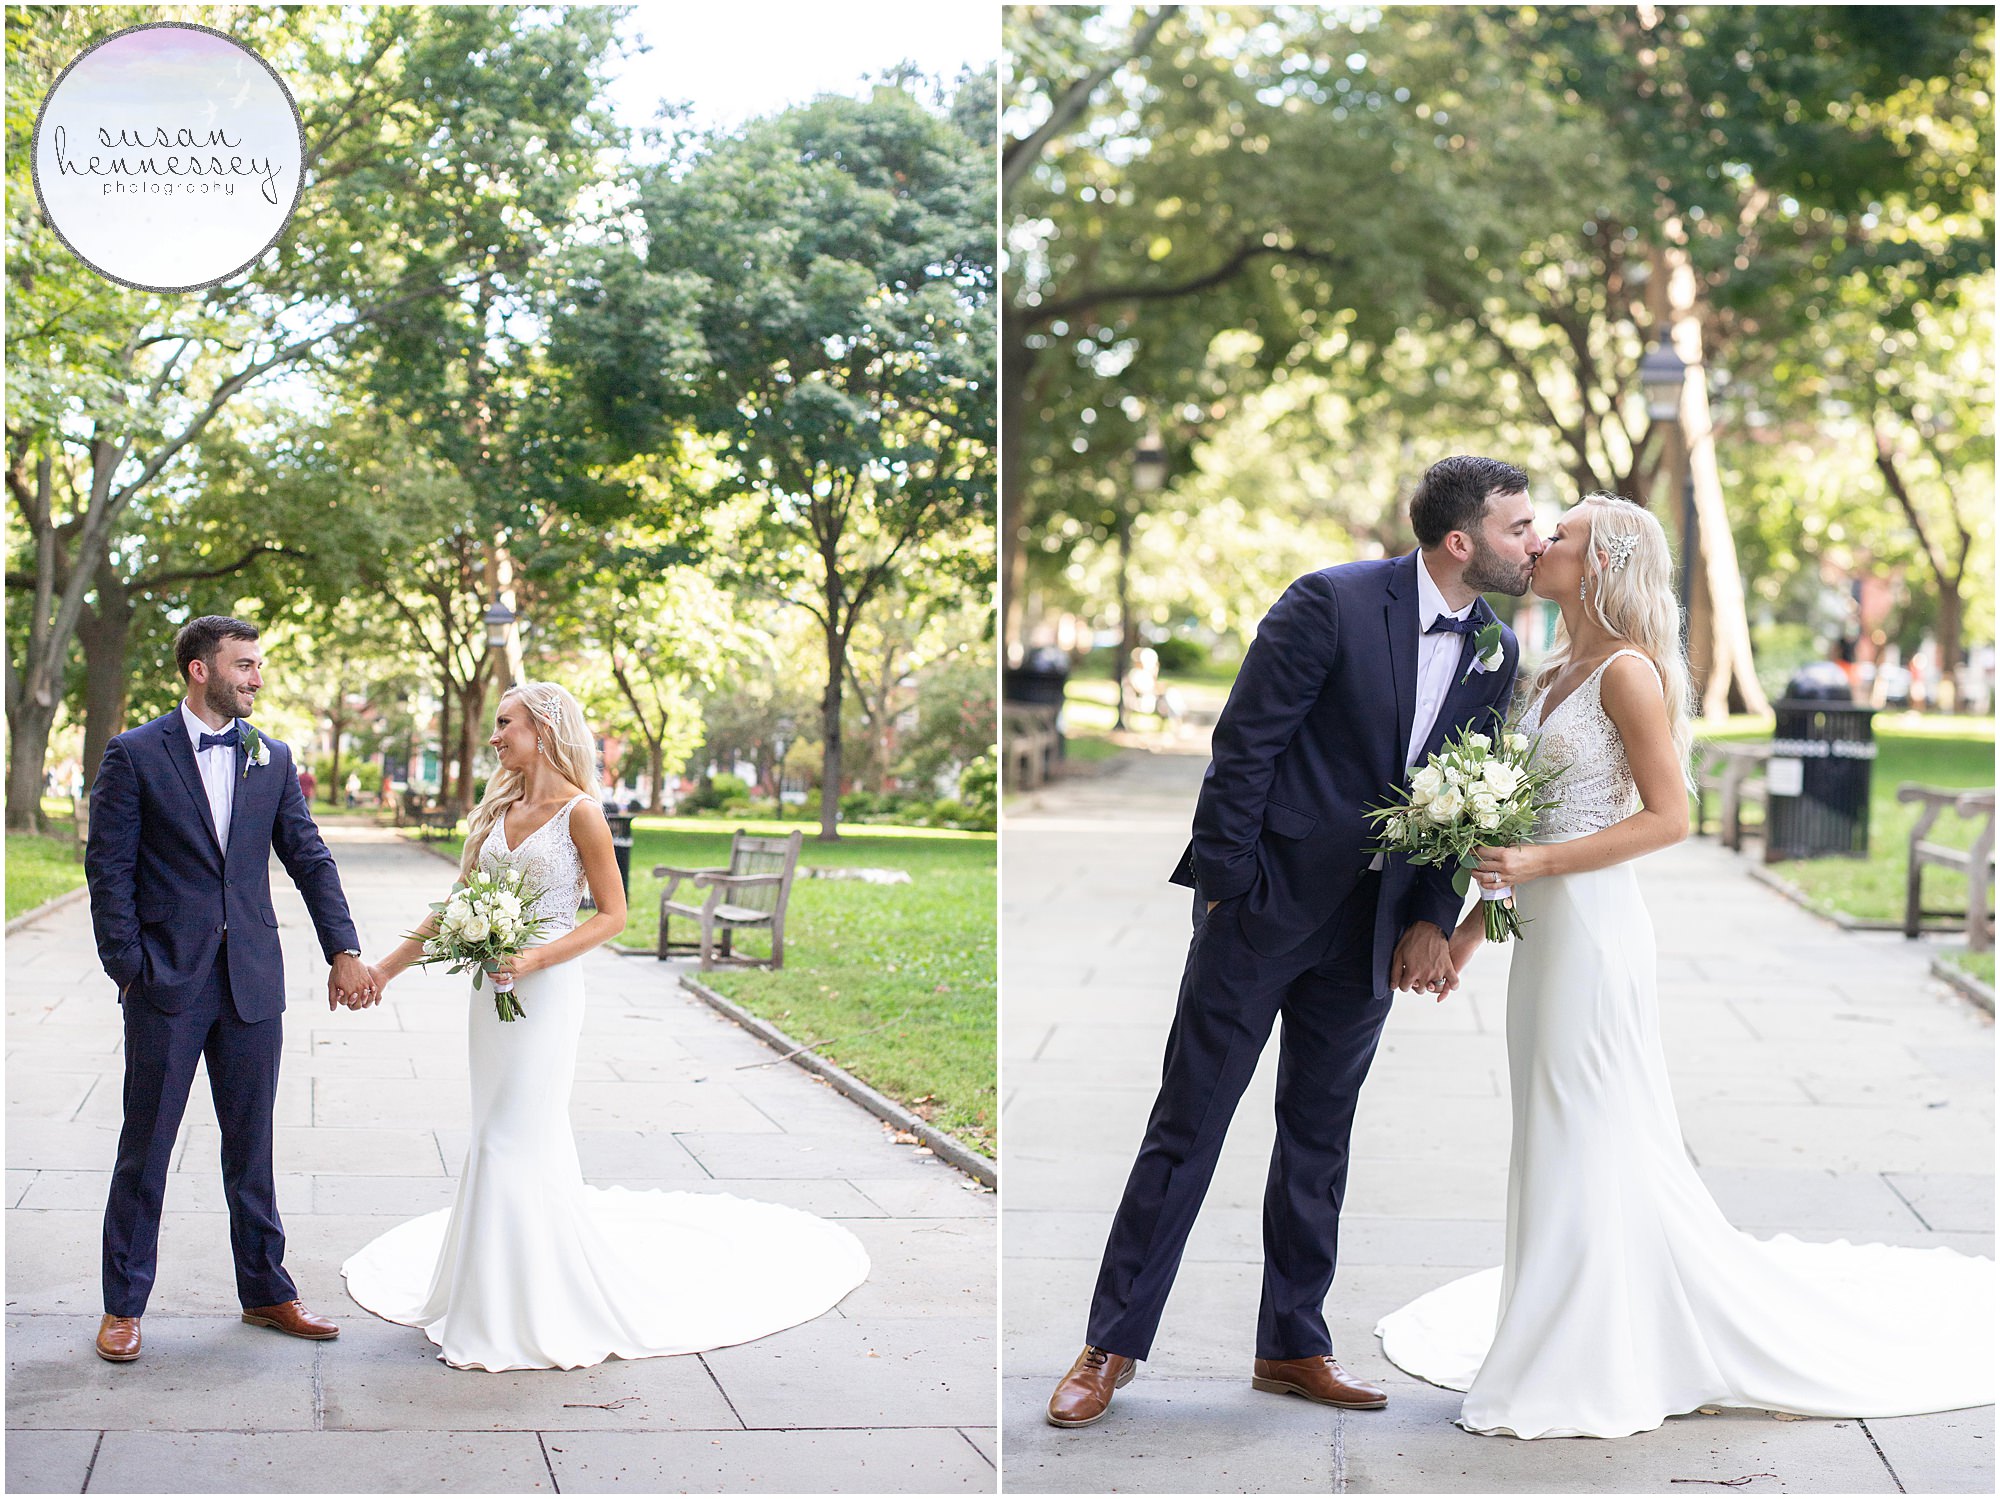 Bride and groom at Washington Square Park in Philadelphia